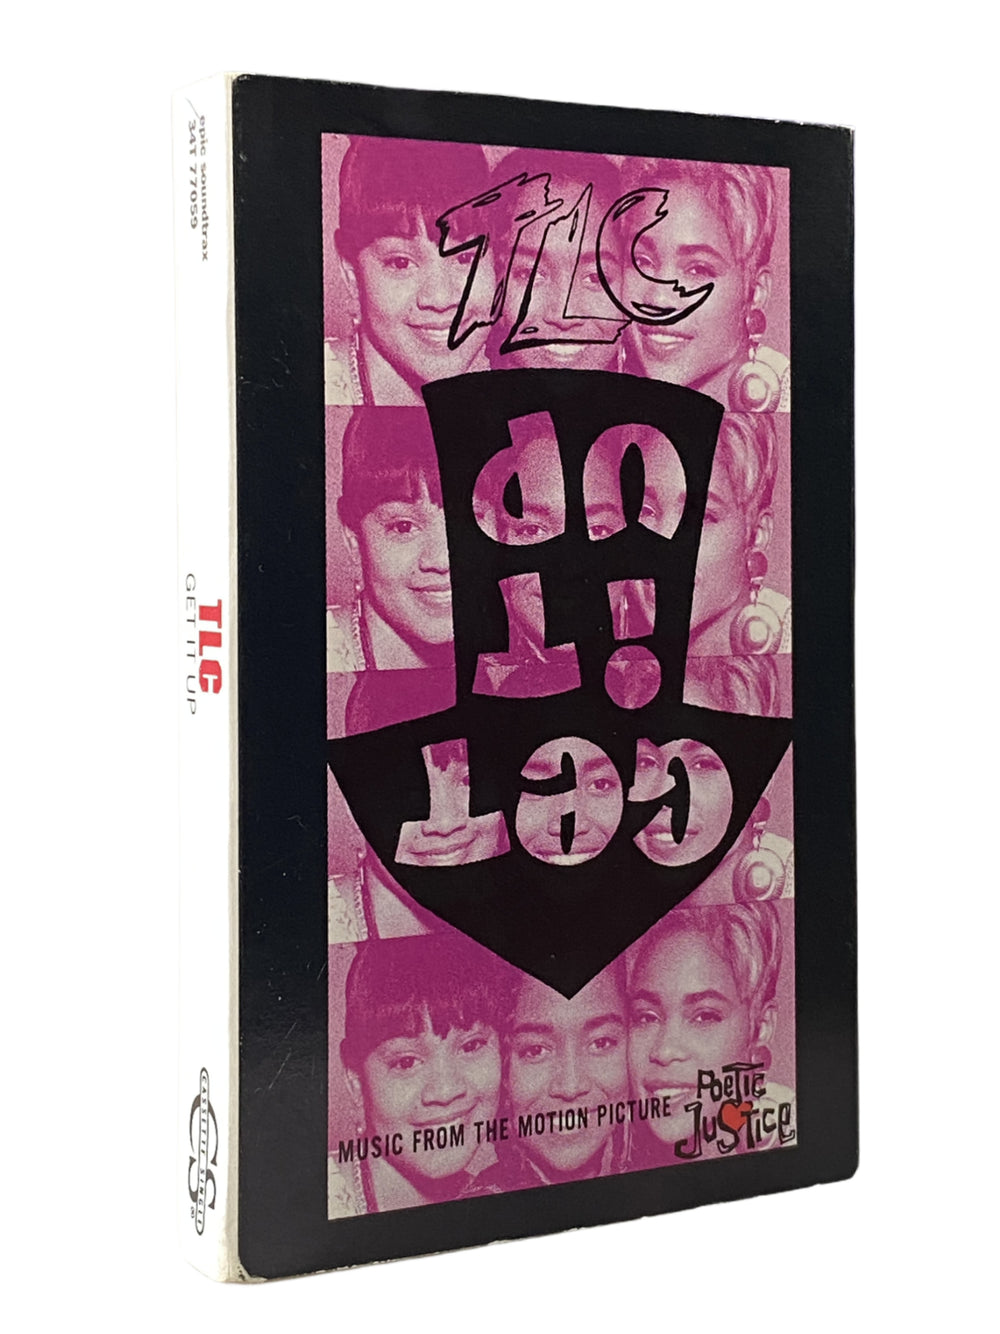 Prince – TLC Get It Up Tape Cassette Single UK 1993 Written By Prince